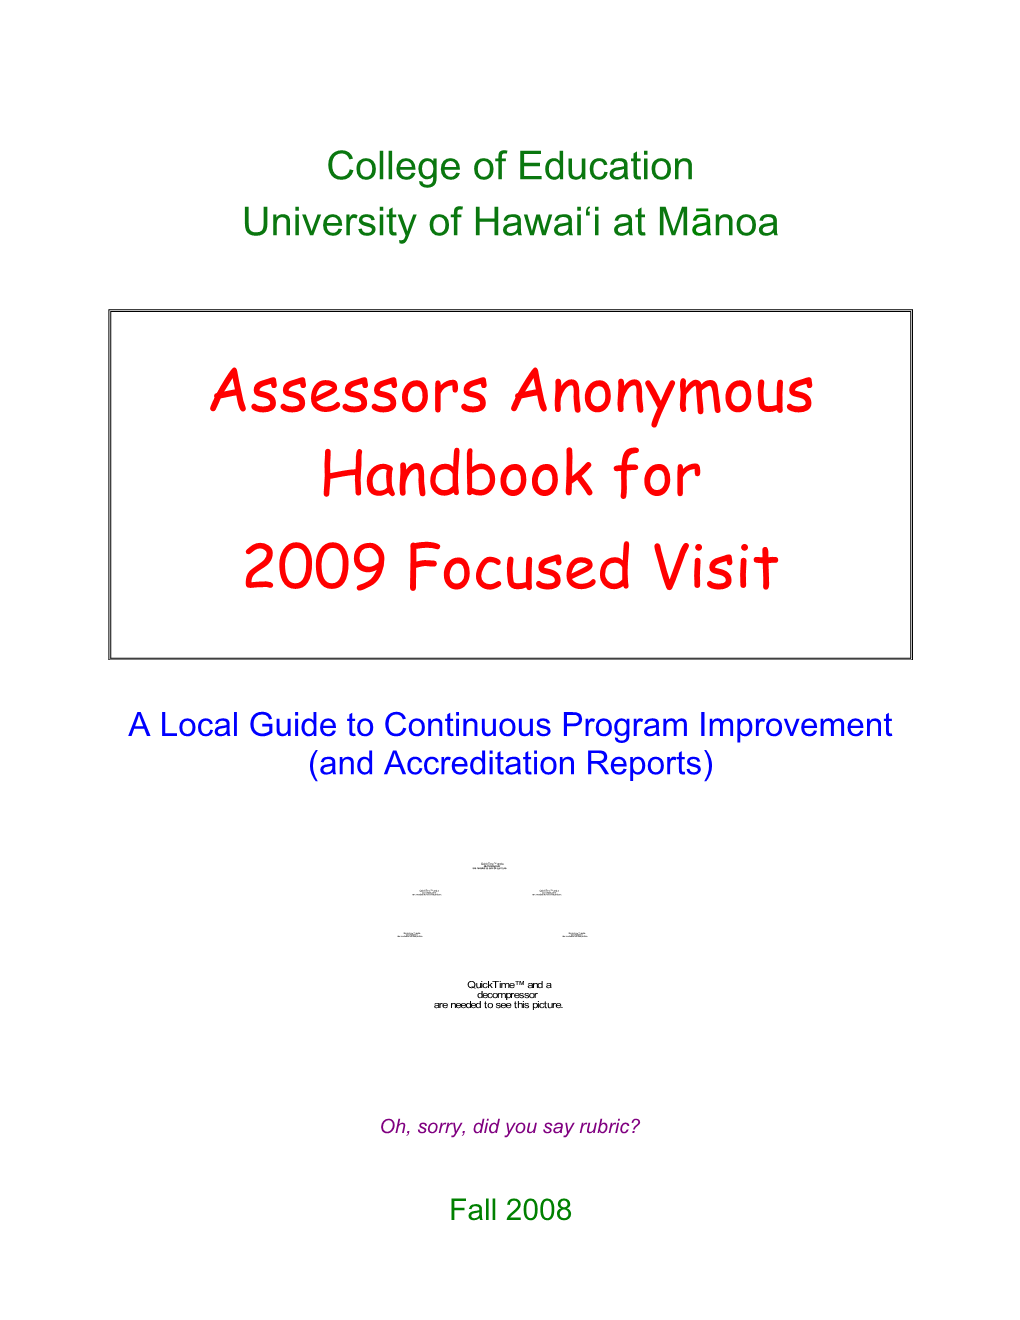 Assessors Anonymous Handbook